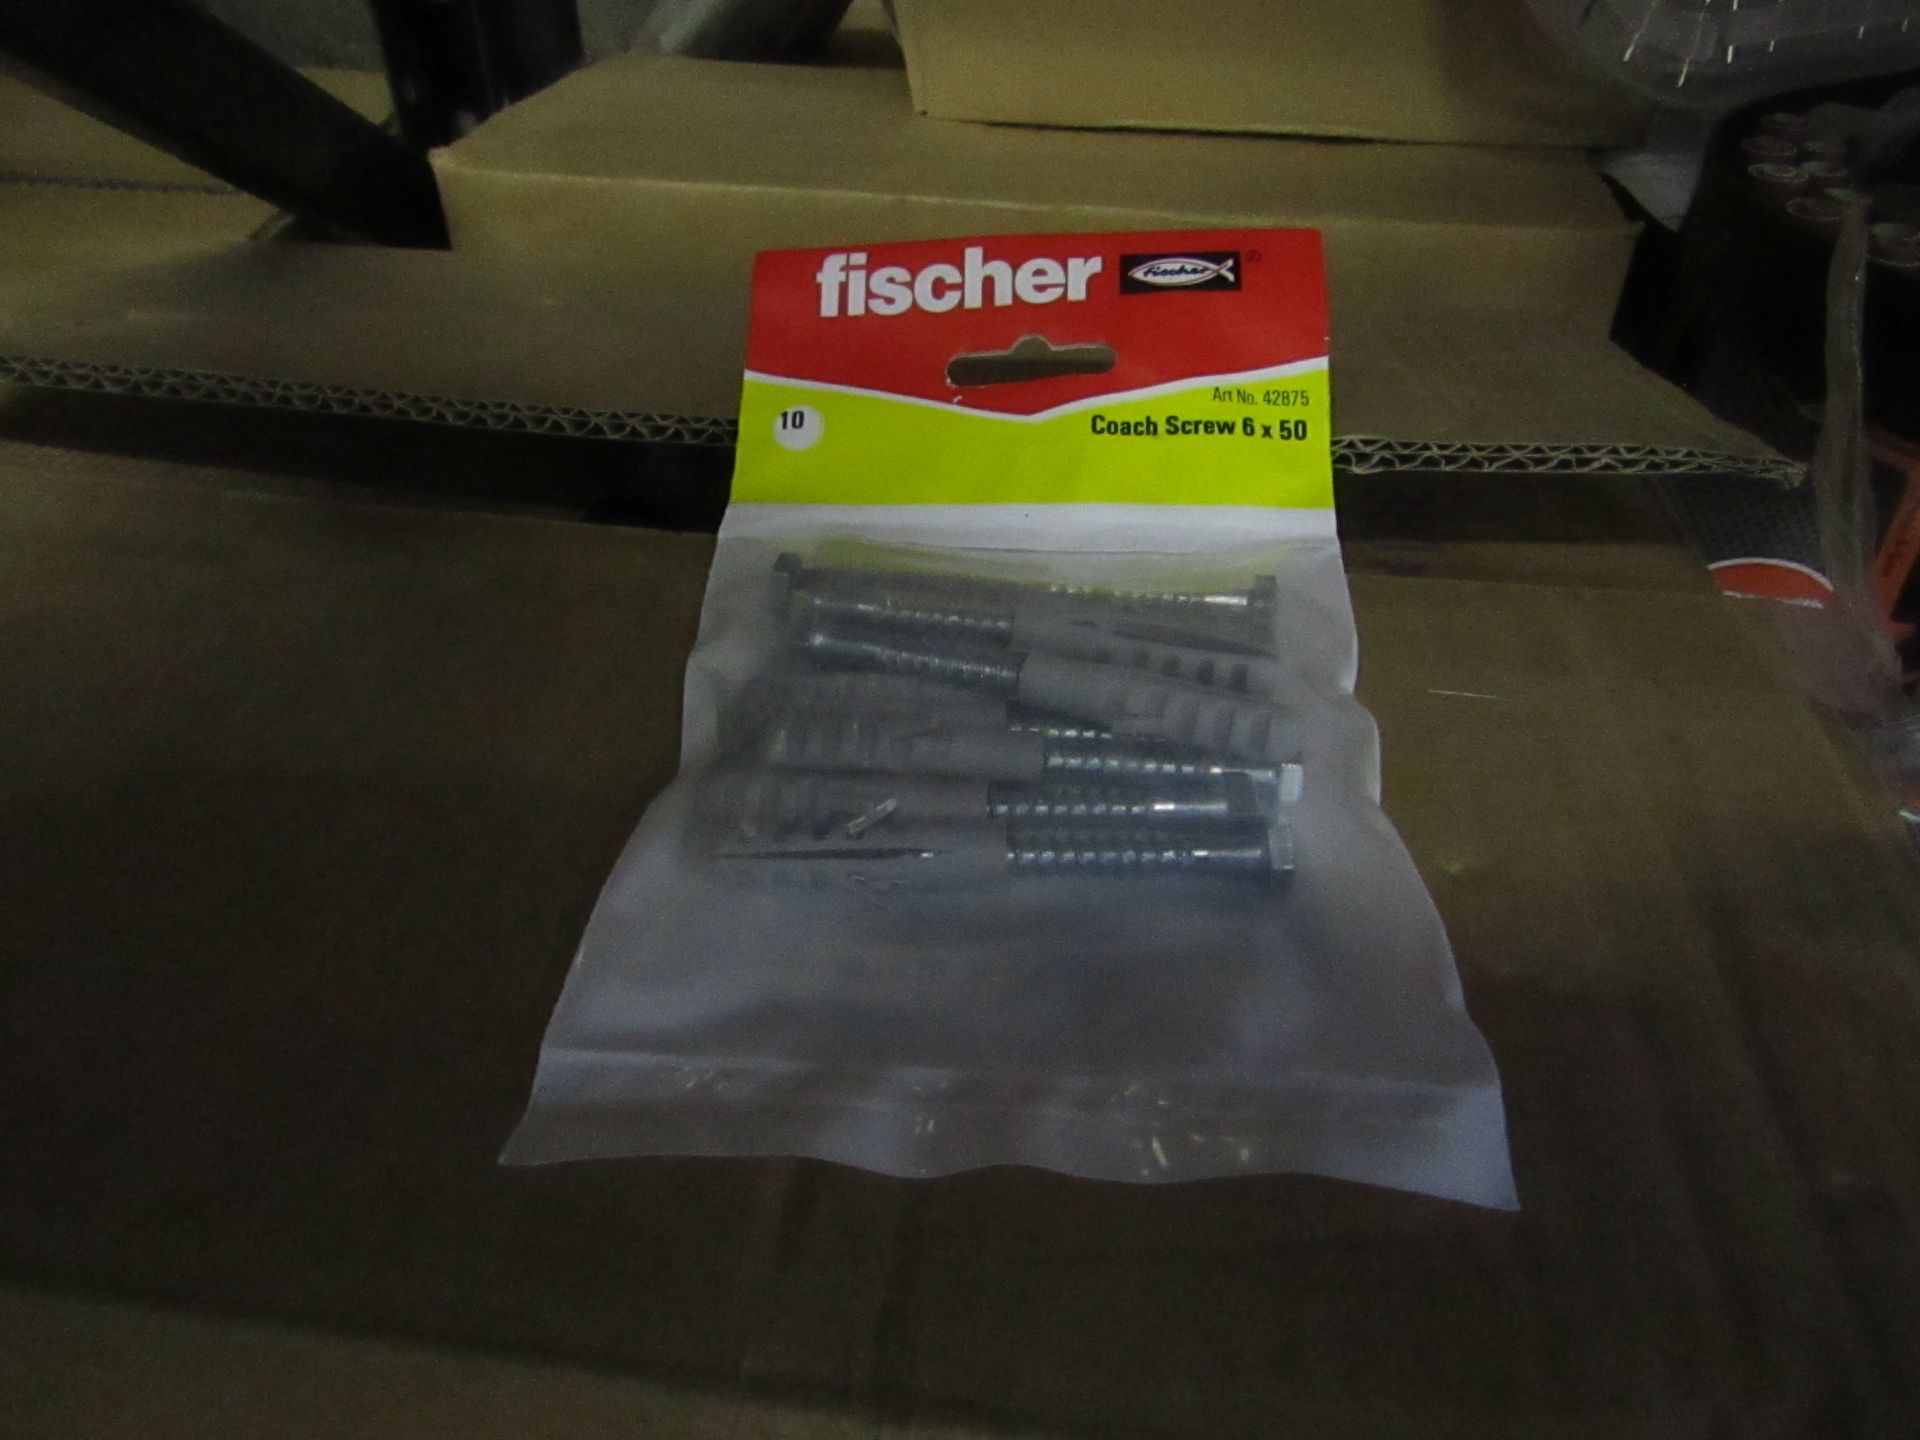 10x Fischer - Coach Screw 6 x 50 (Packs of 10) - New & Packaged.